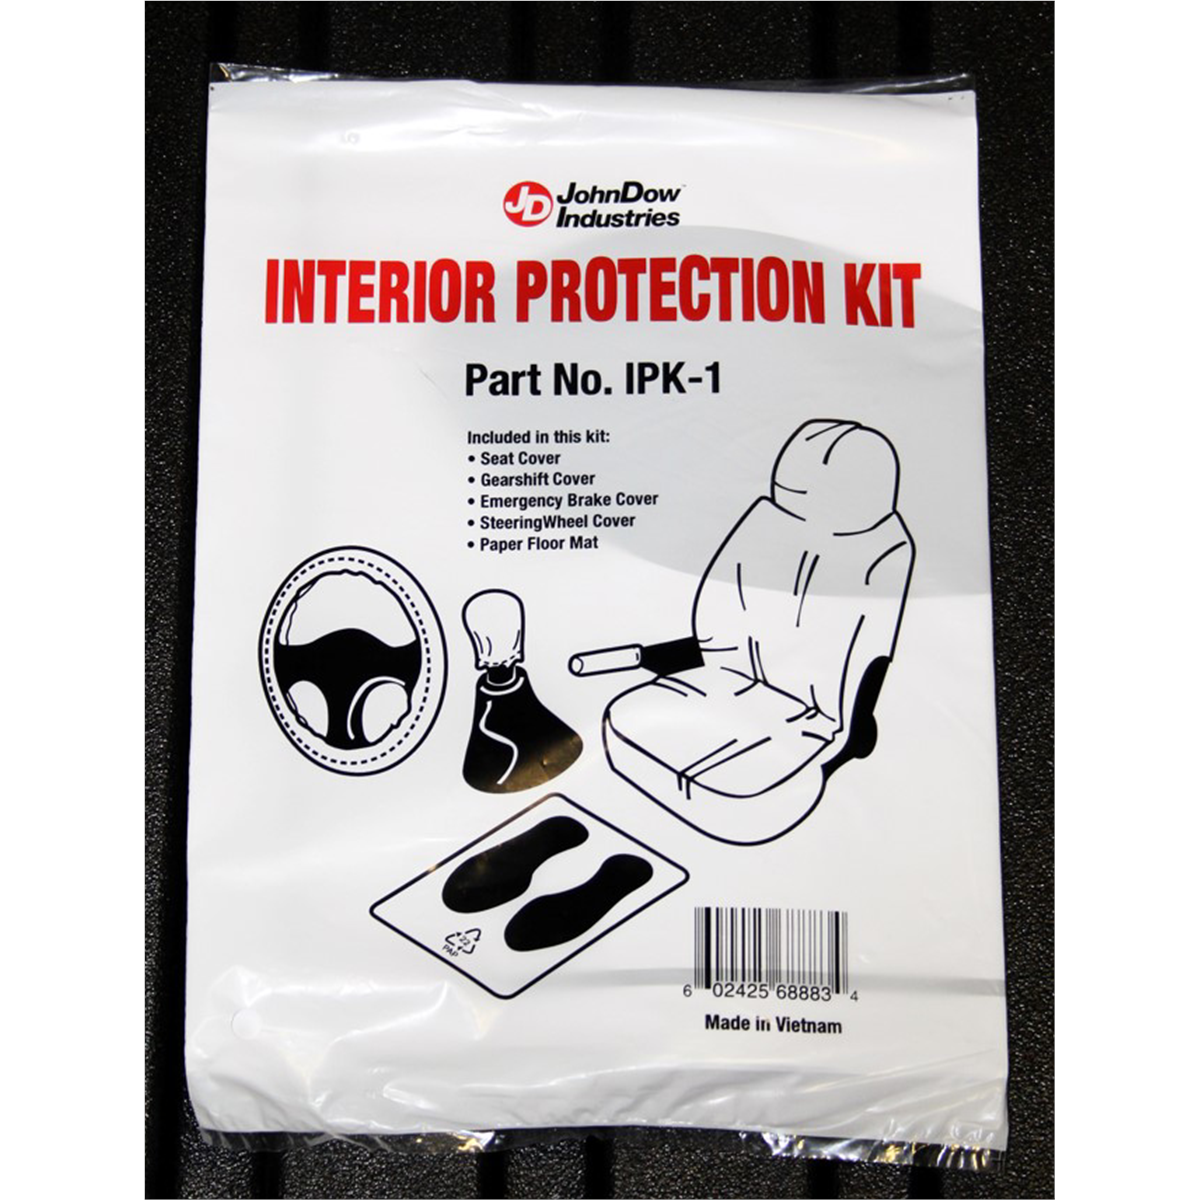 Interior Protection Kit 100 per Box